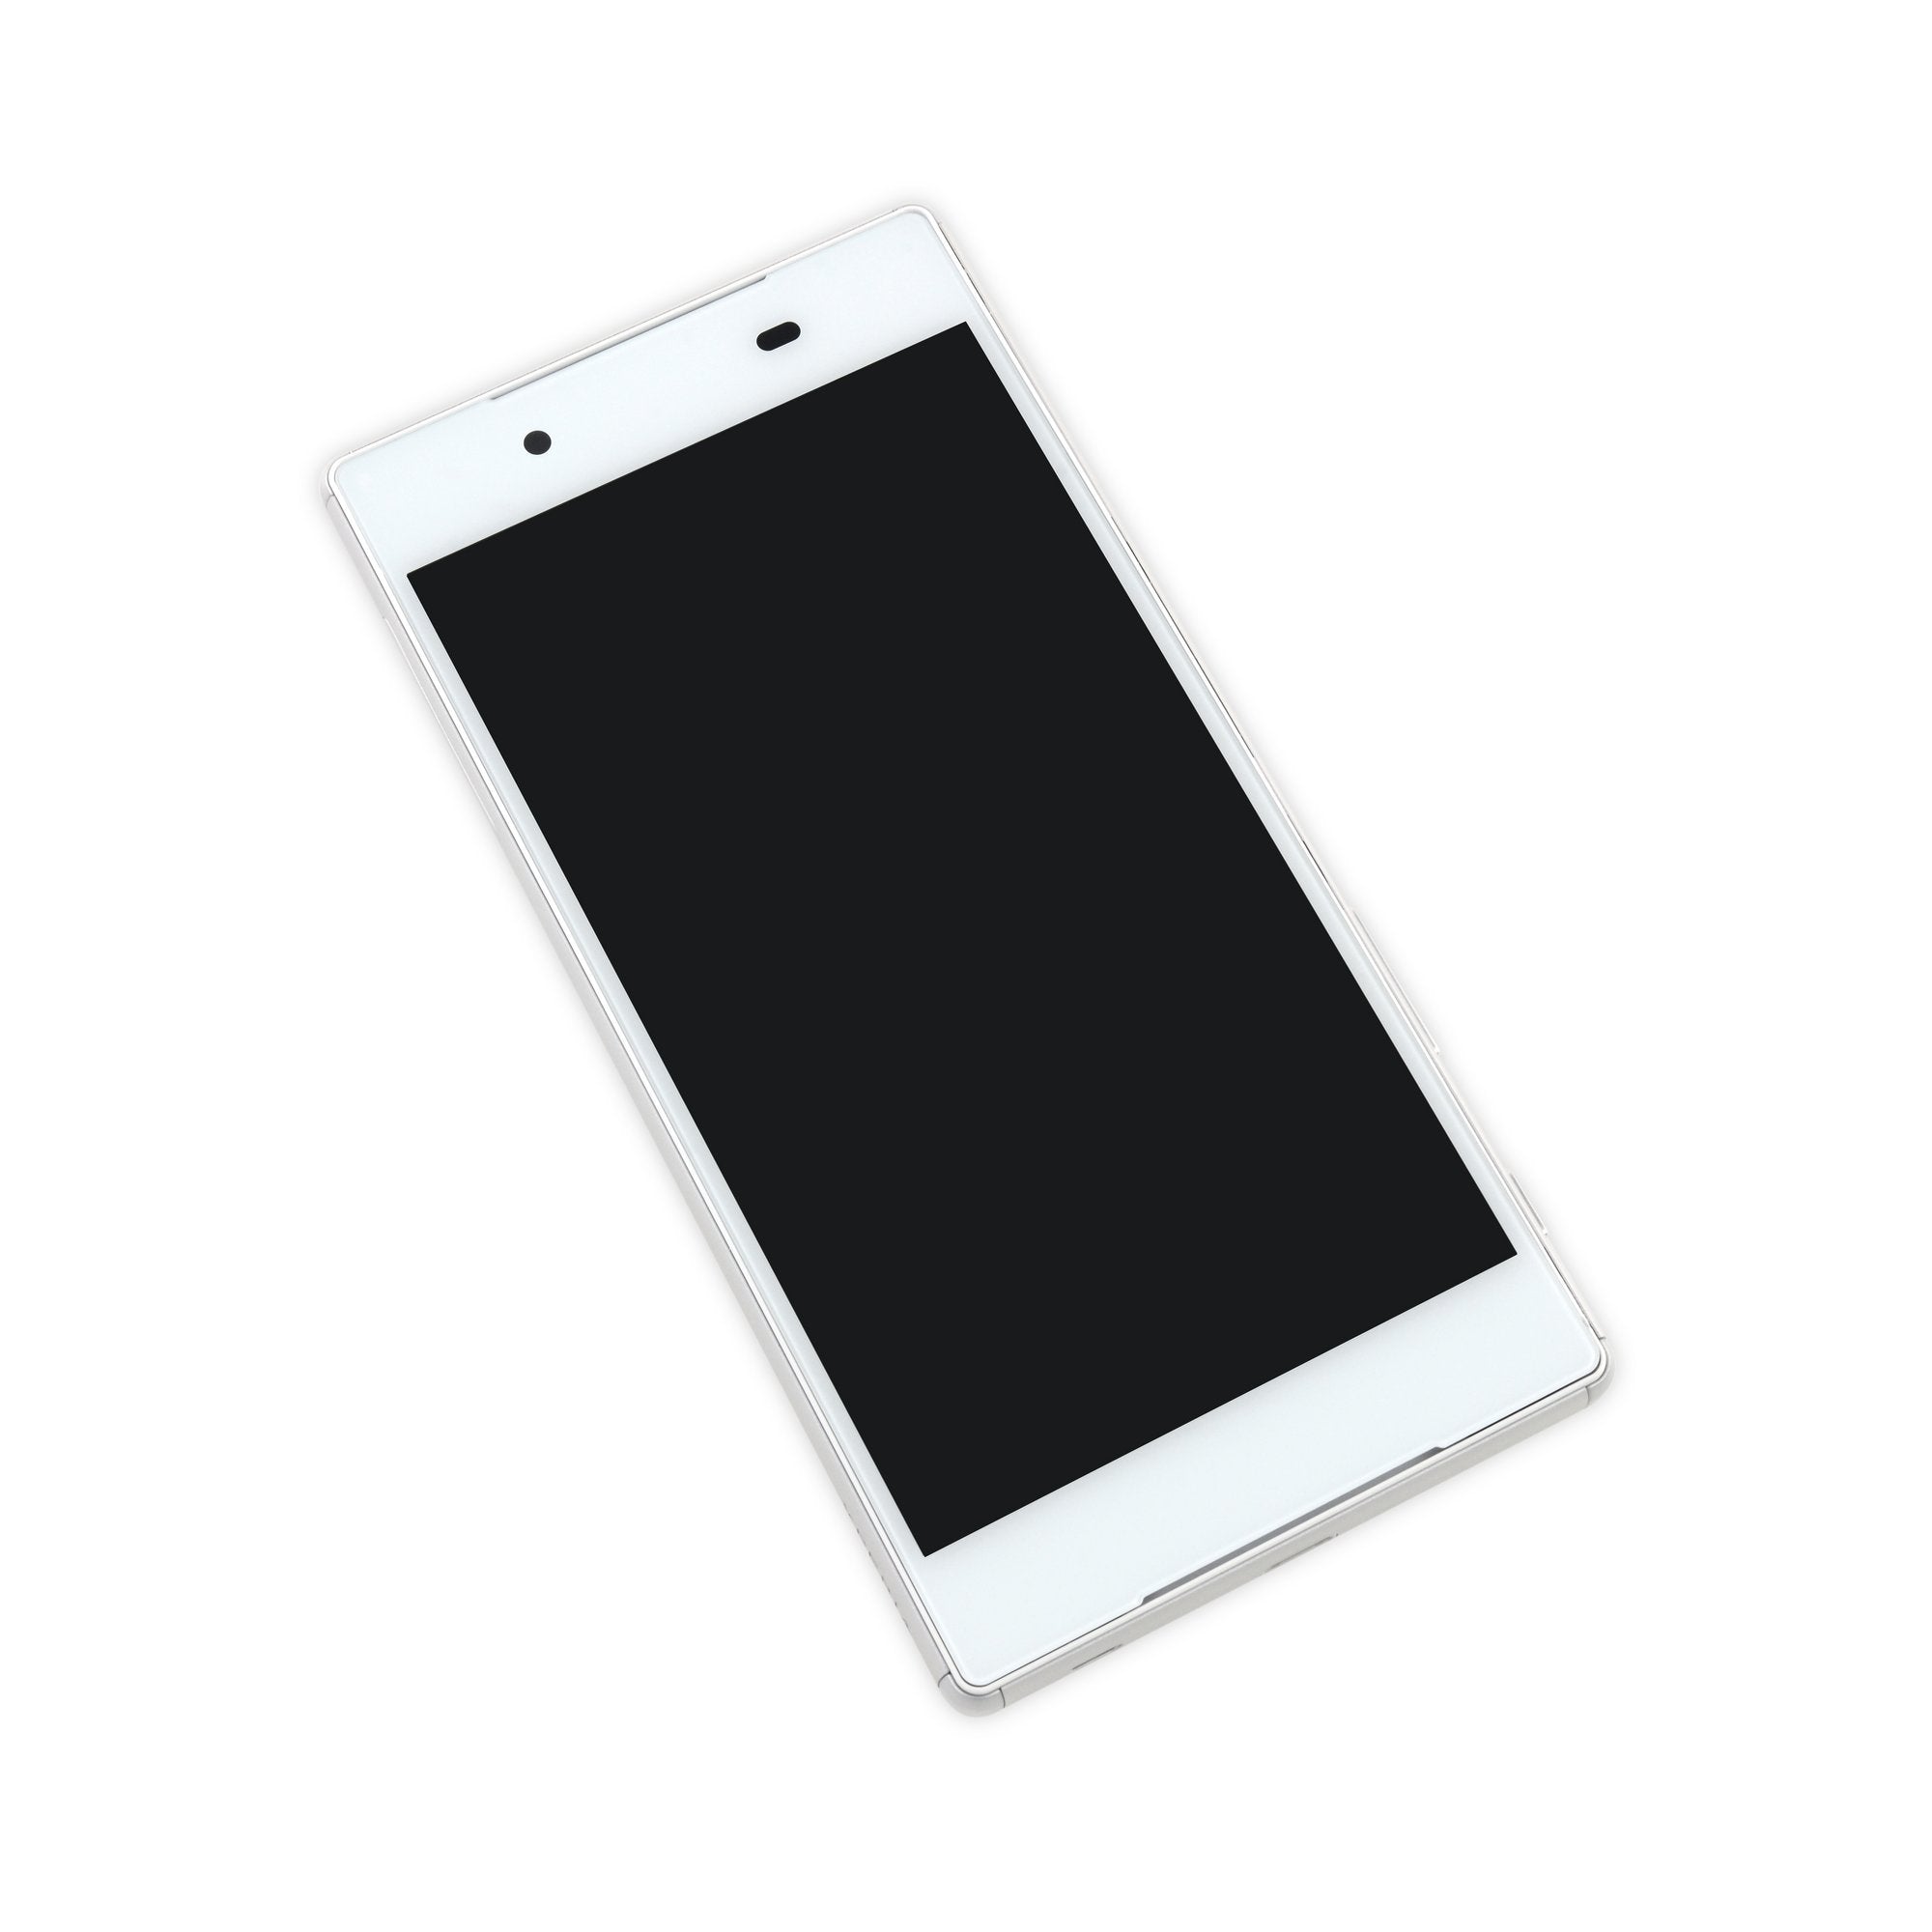 Sony Xperia Z5 Screen Assembly White New